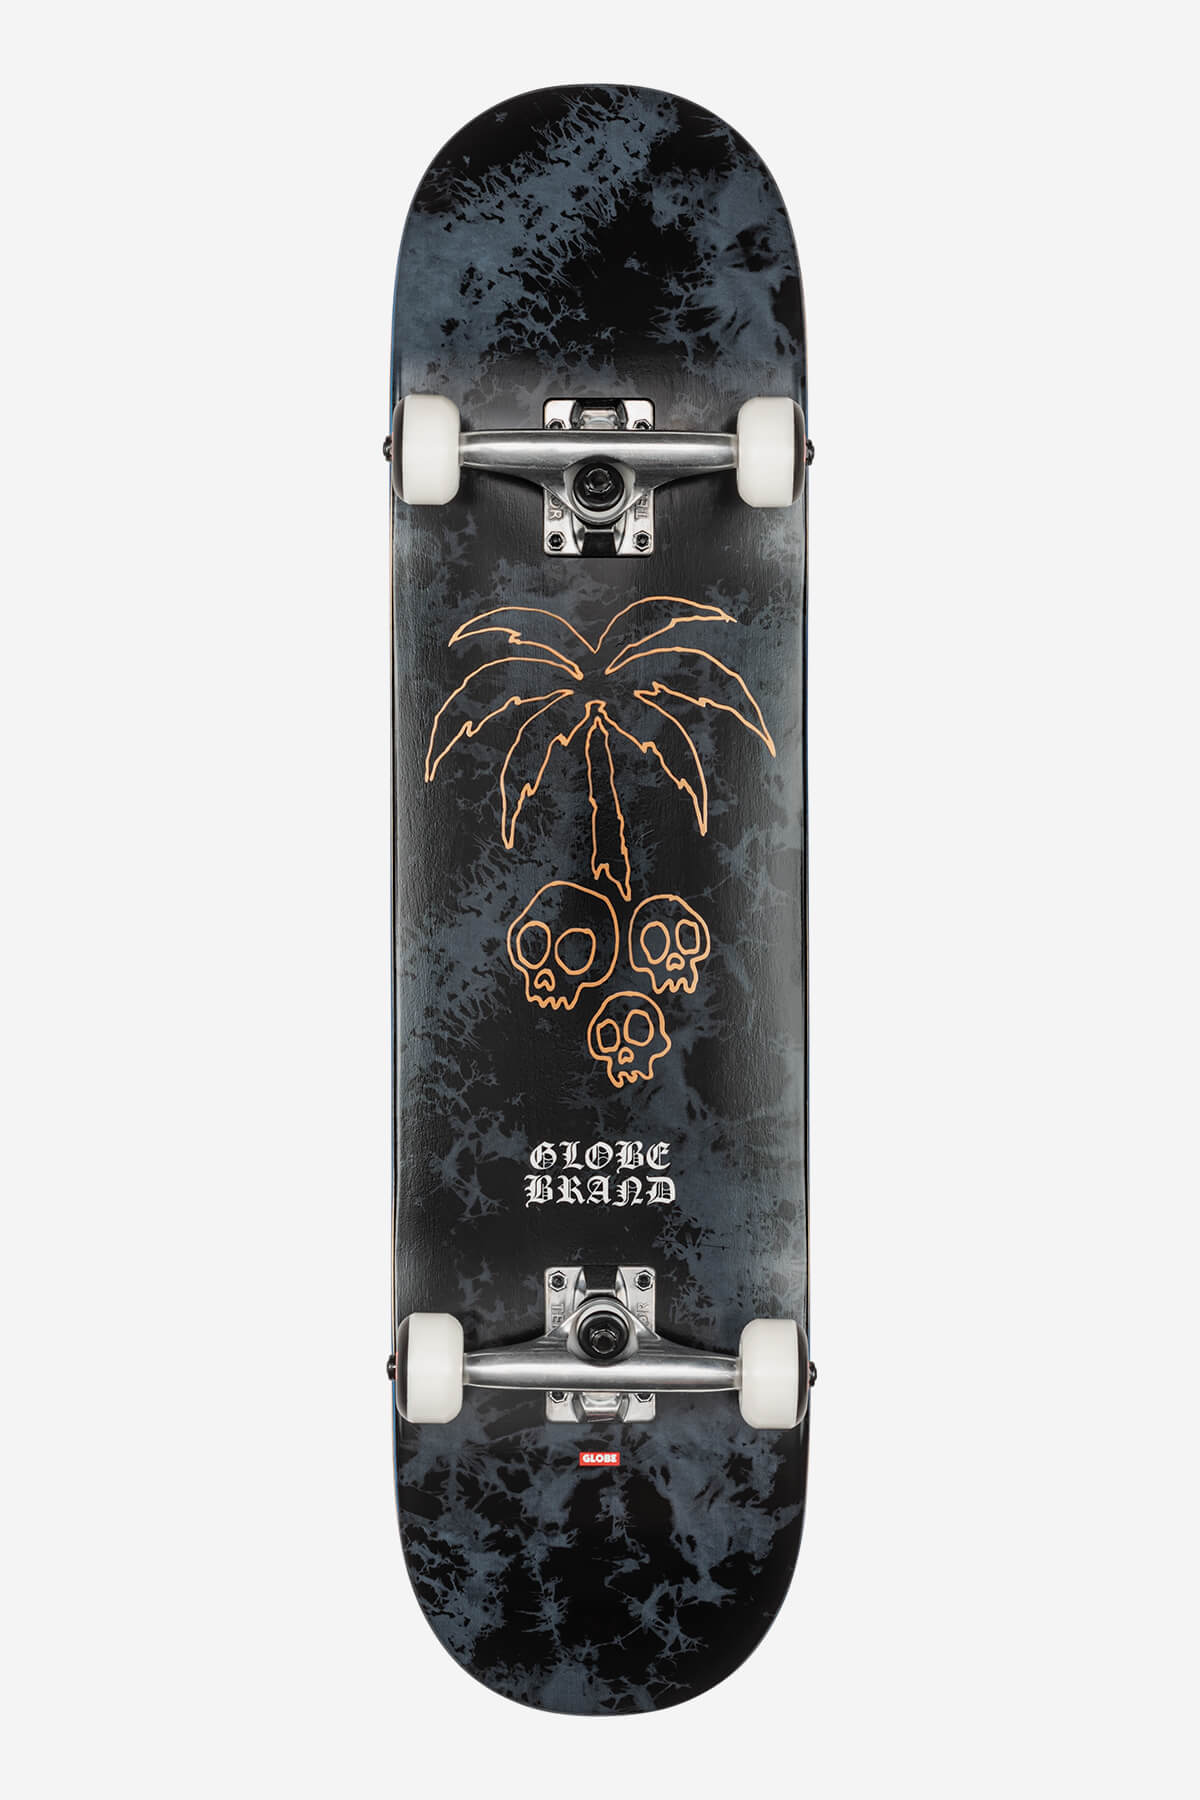 Globe - G1 Natives - Black/Copper - 8.0" Compleet Skateboard